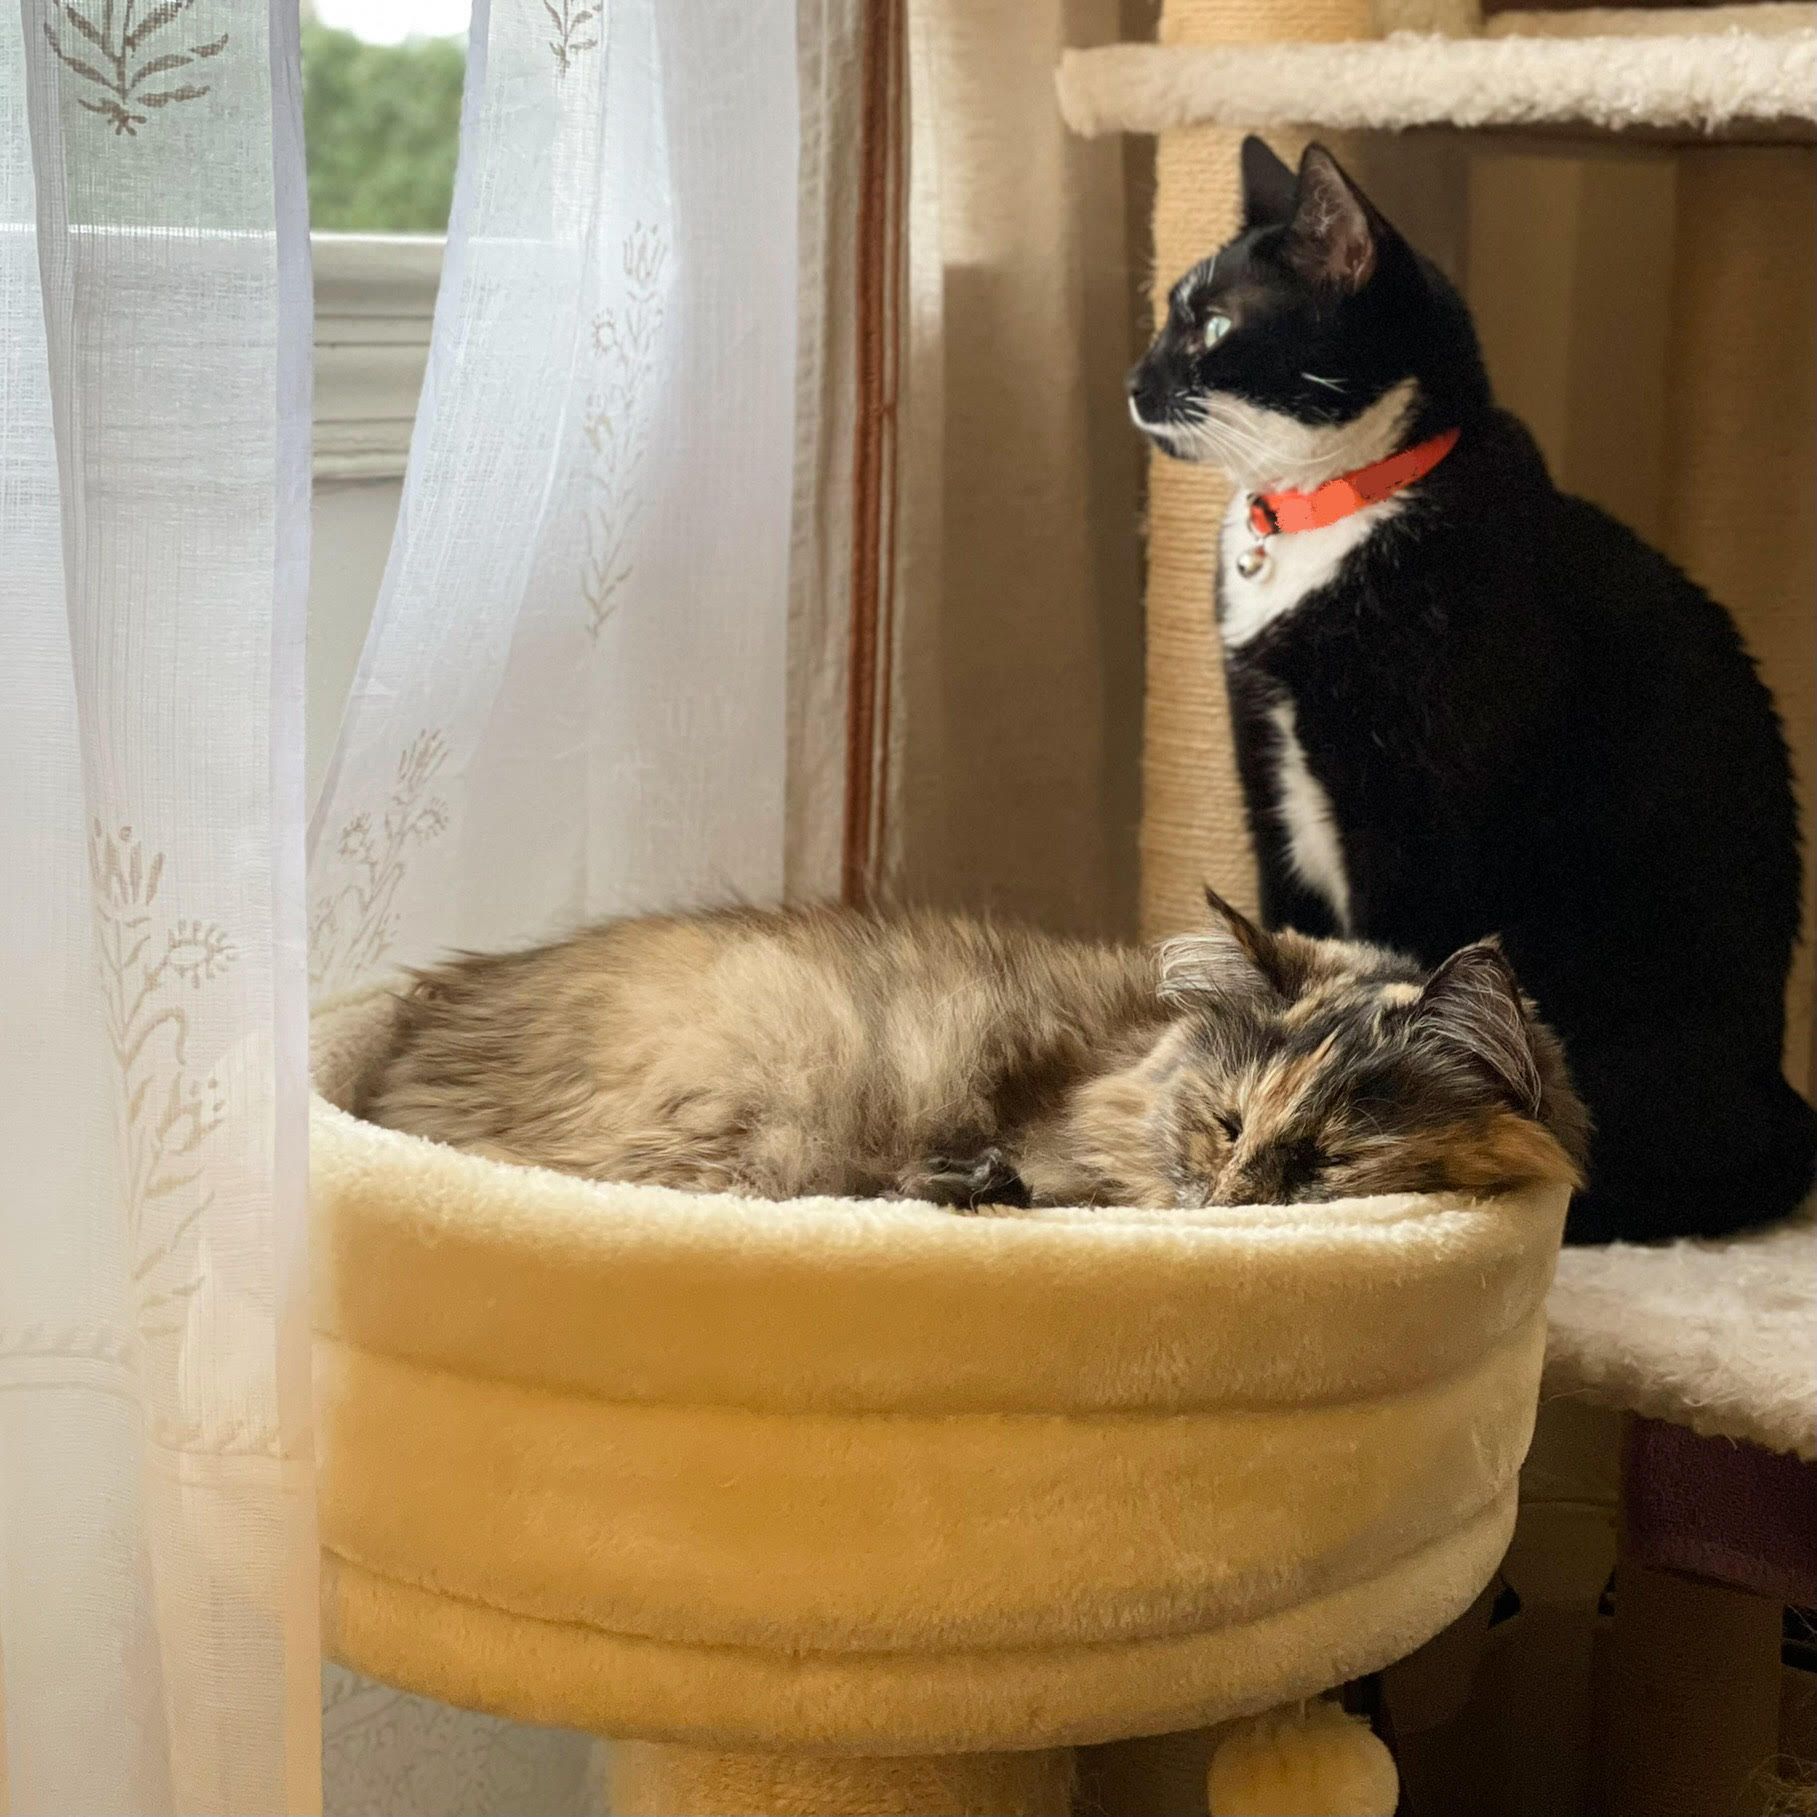 Two cats sit near a window.